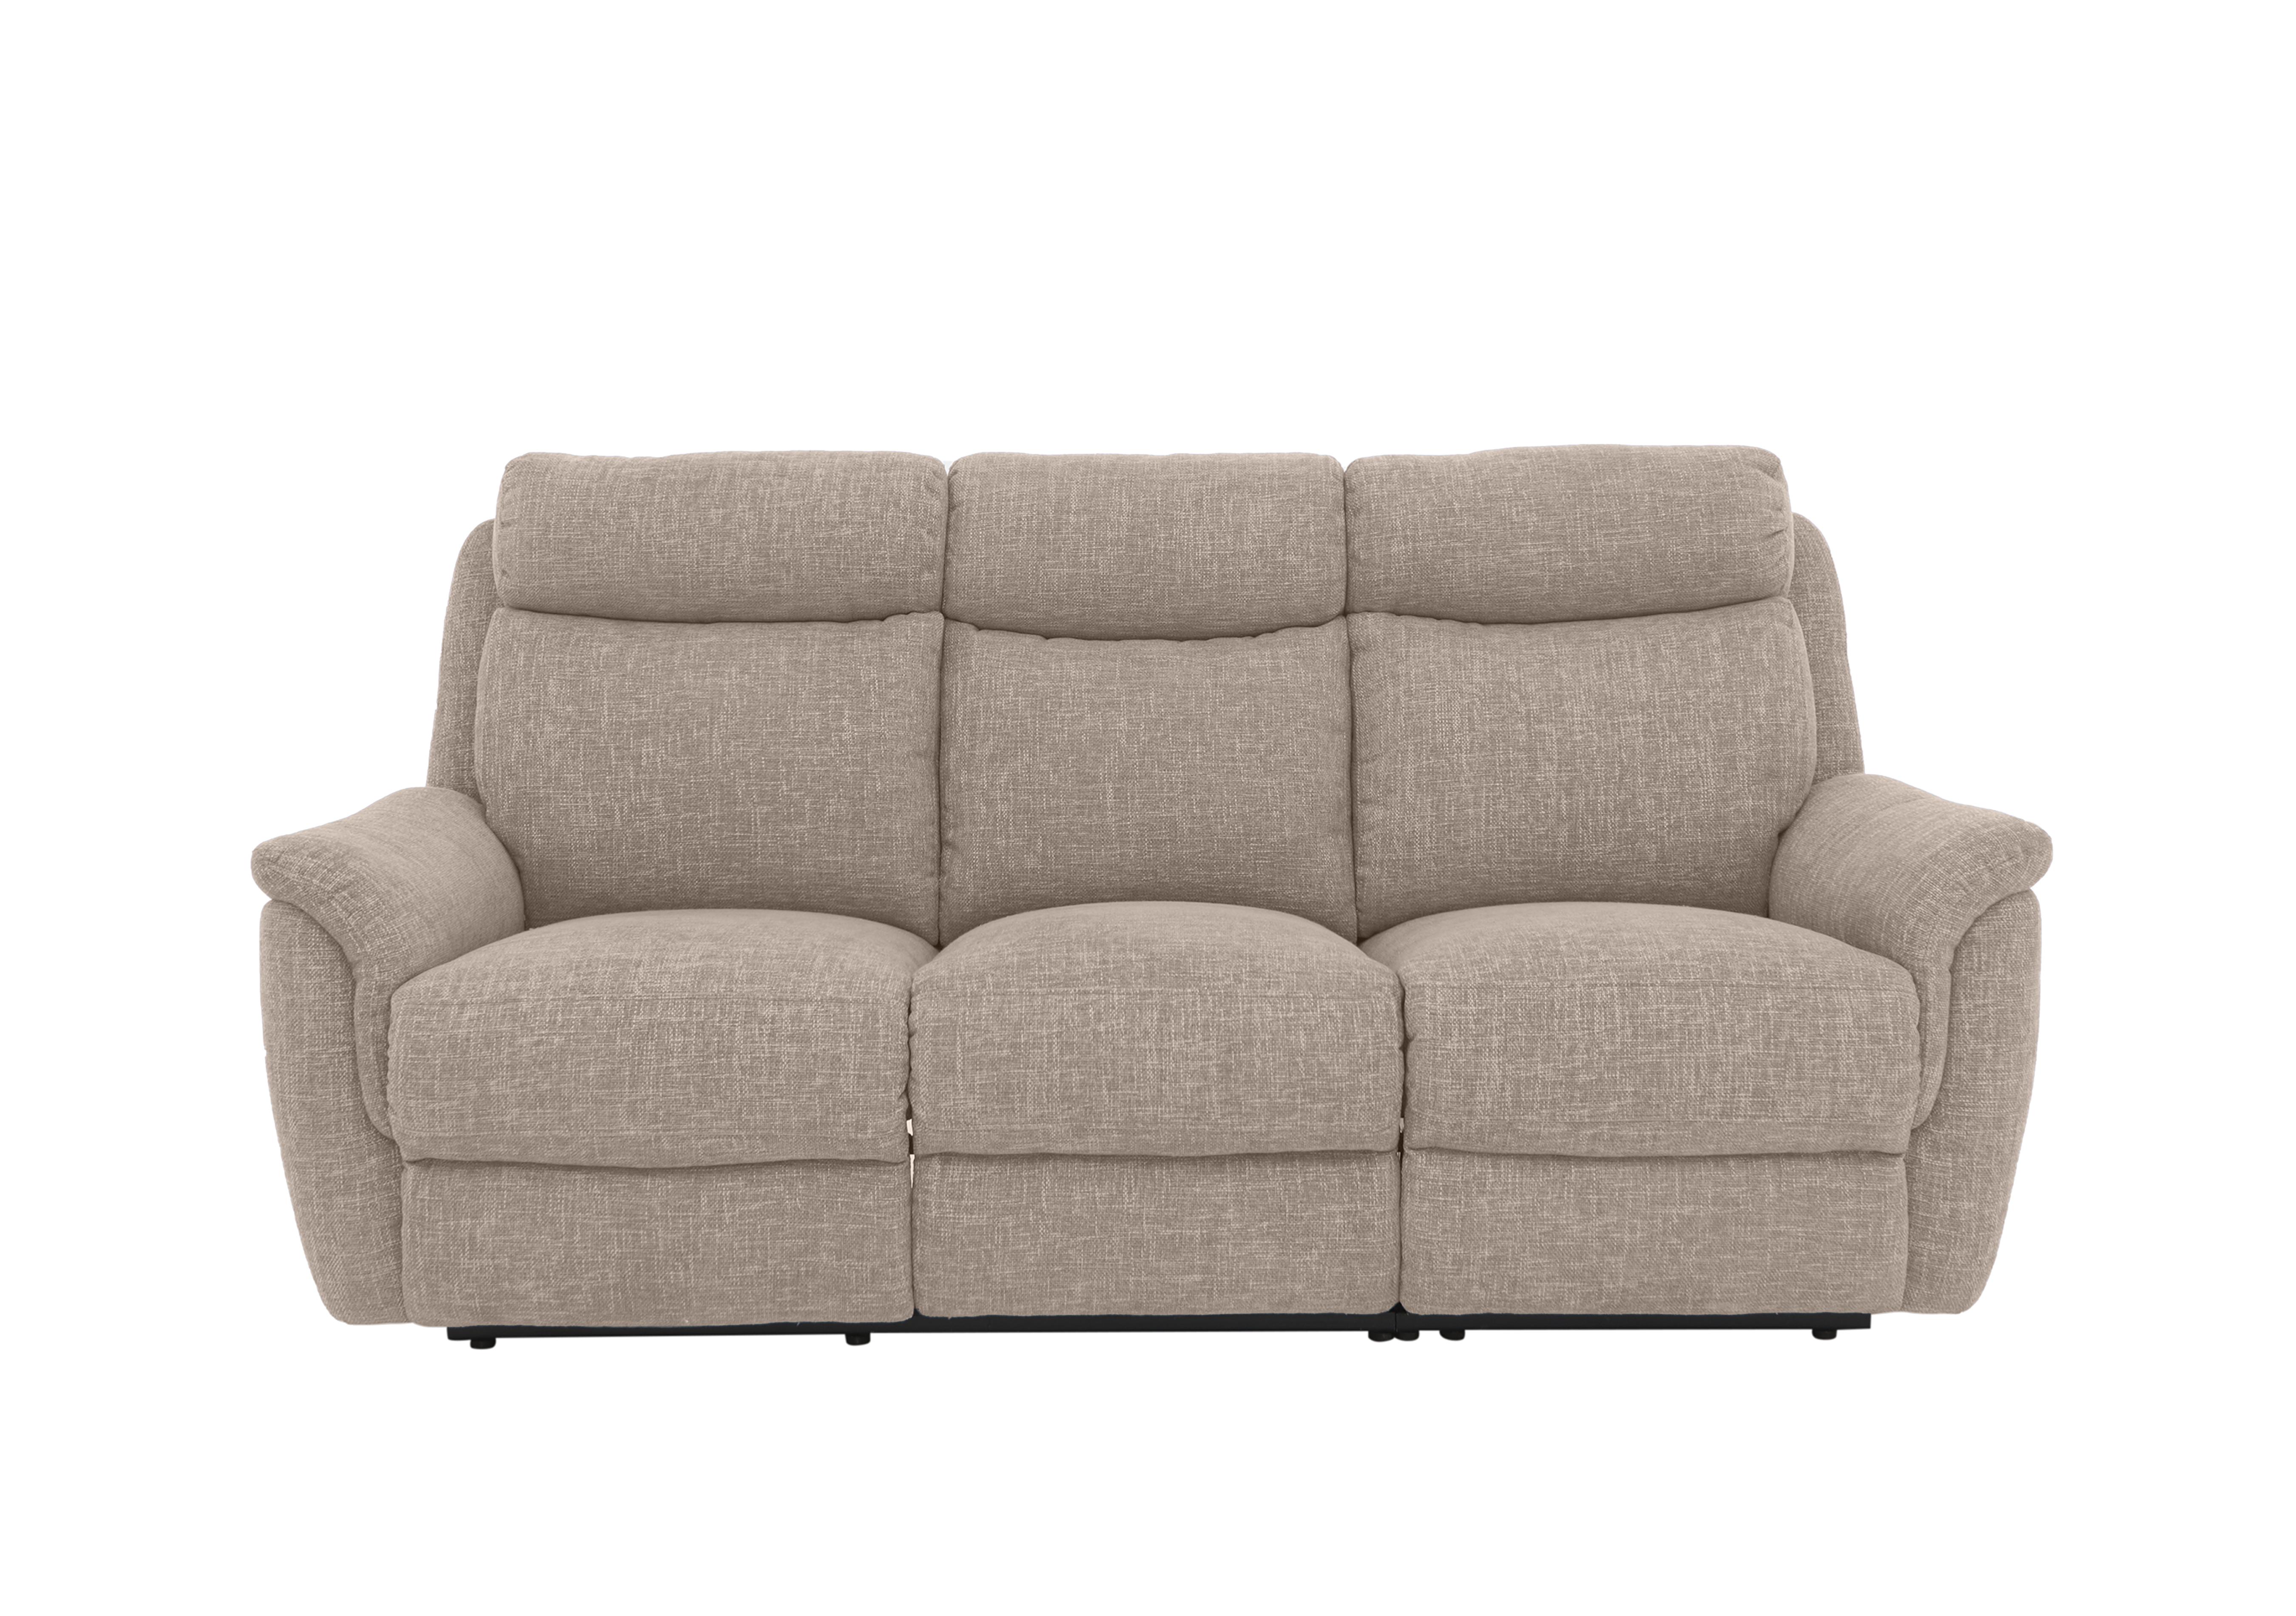 Orlando 3 Seater Fabric Sofa in Anivia Khaki 14445 on Furniture Village